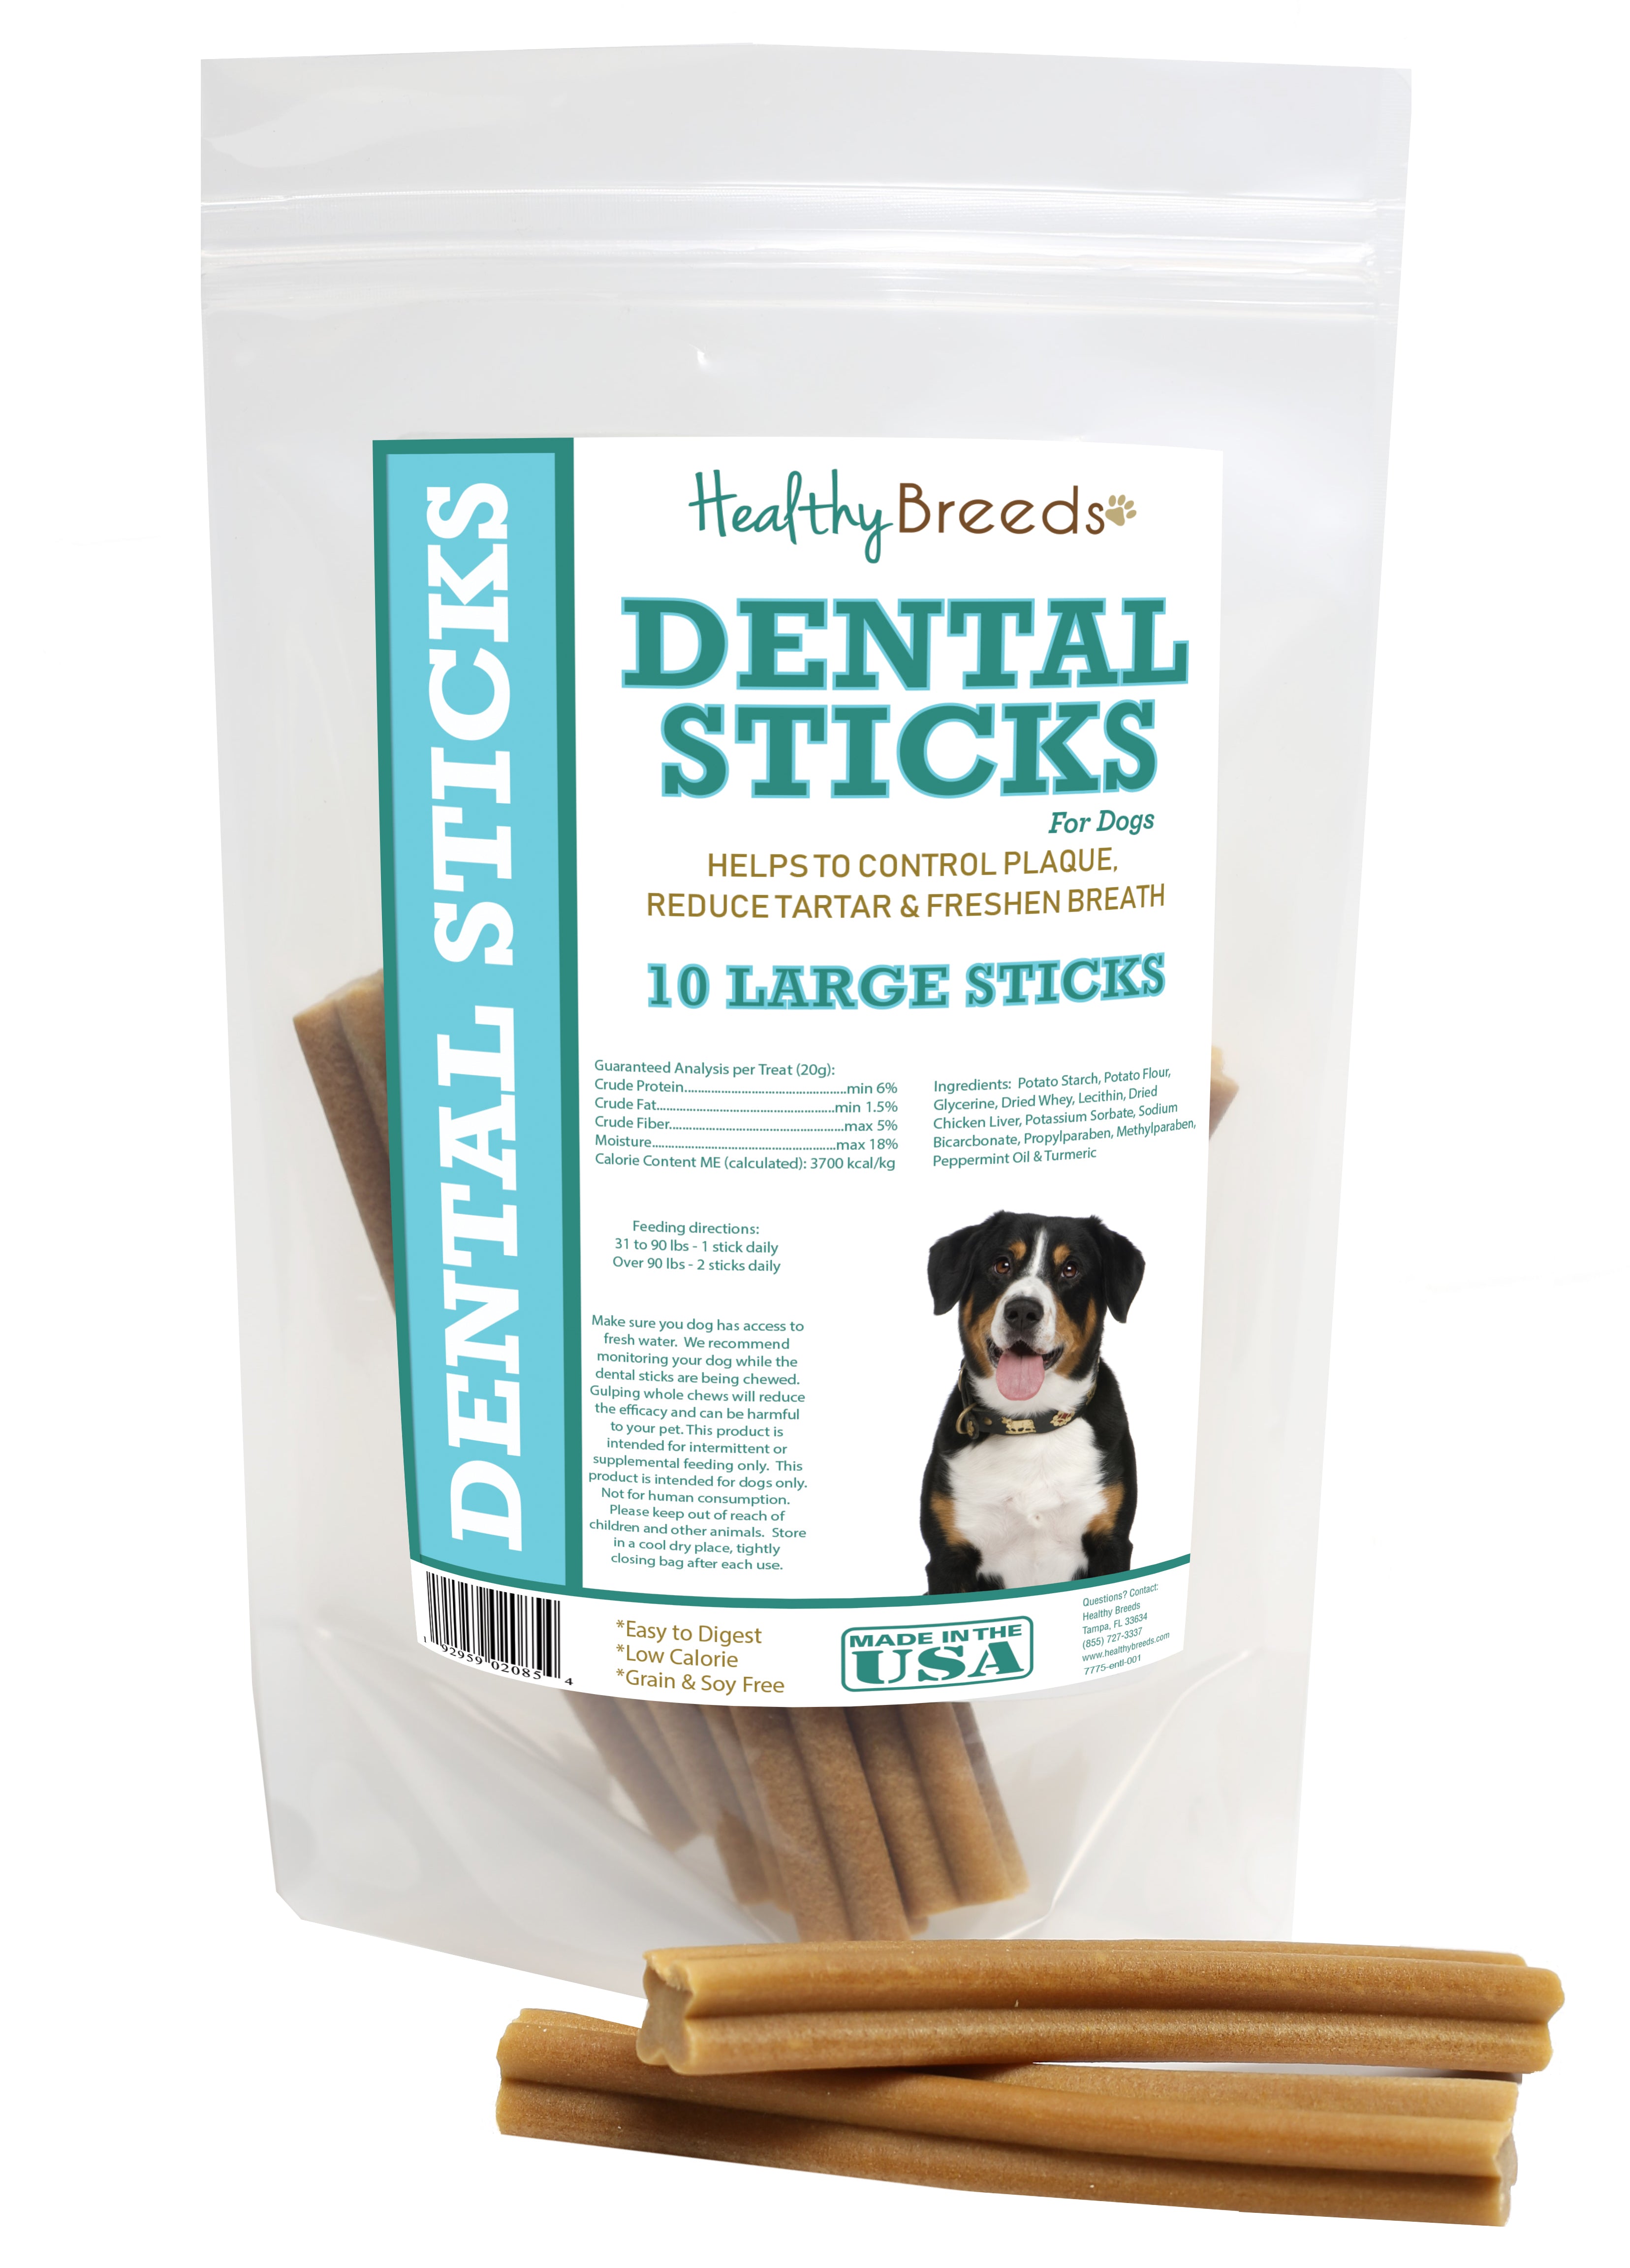 Entlebucher Mountain Dog Dental Sticks Large 10 Count